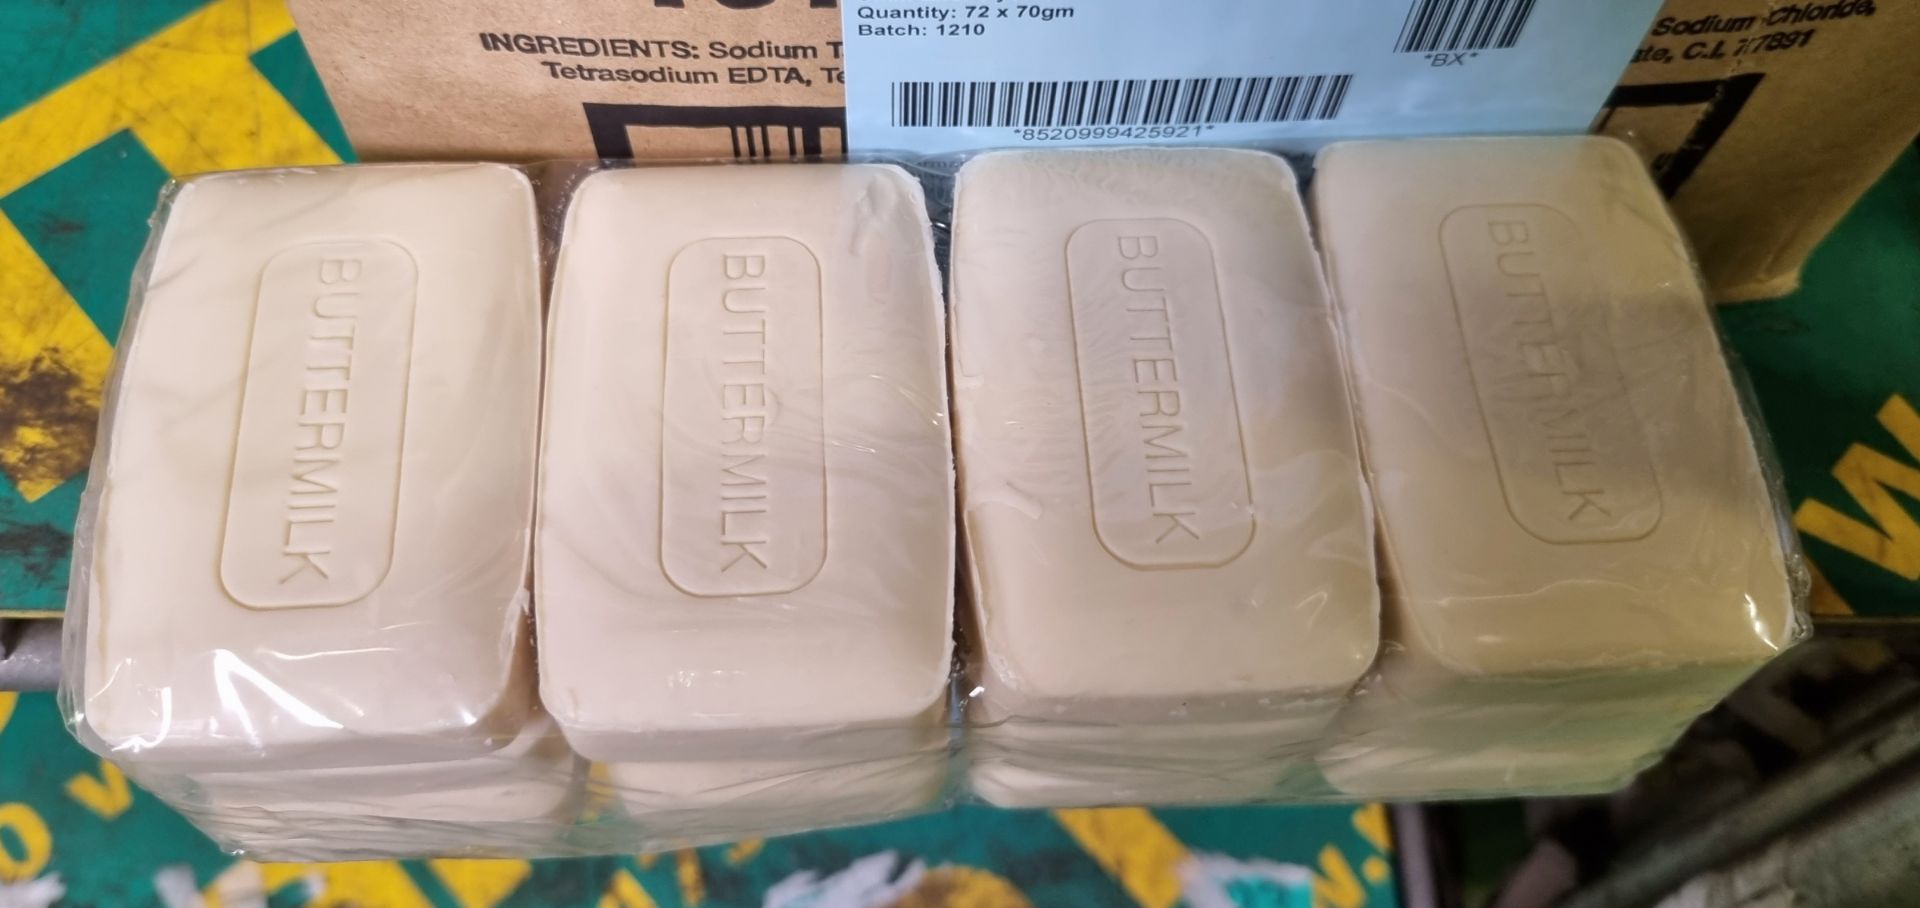 4x boxes of Buttermilk soap bar 70g - 72 units per box - Image 2 of 2